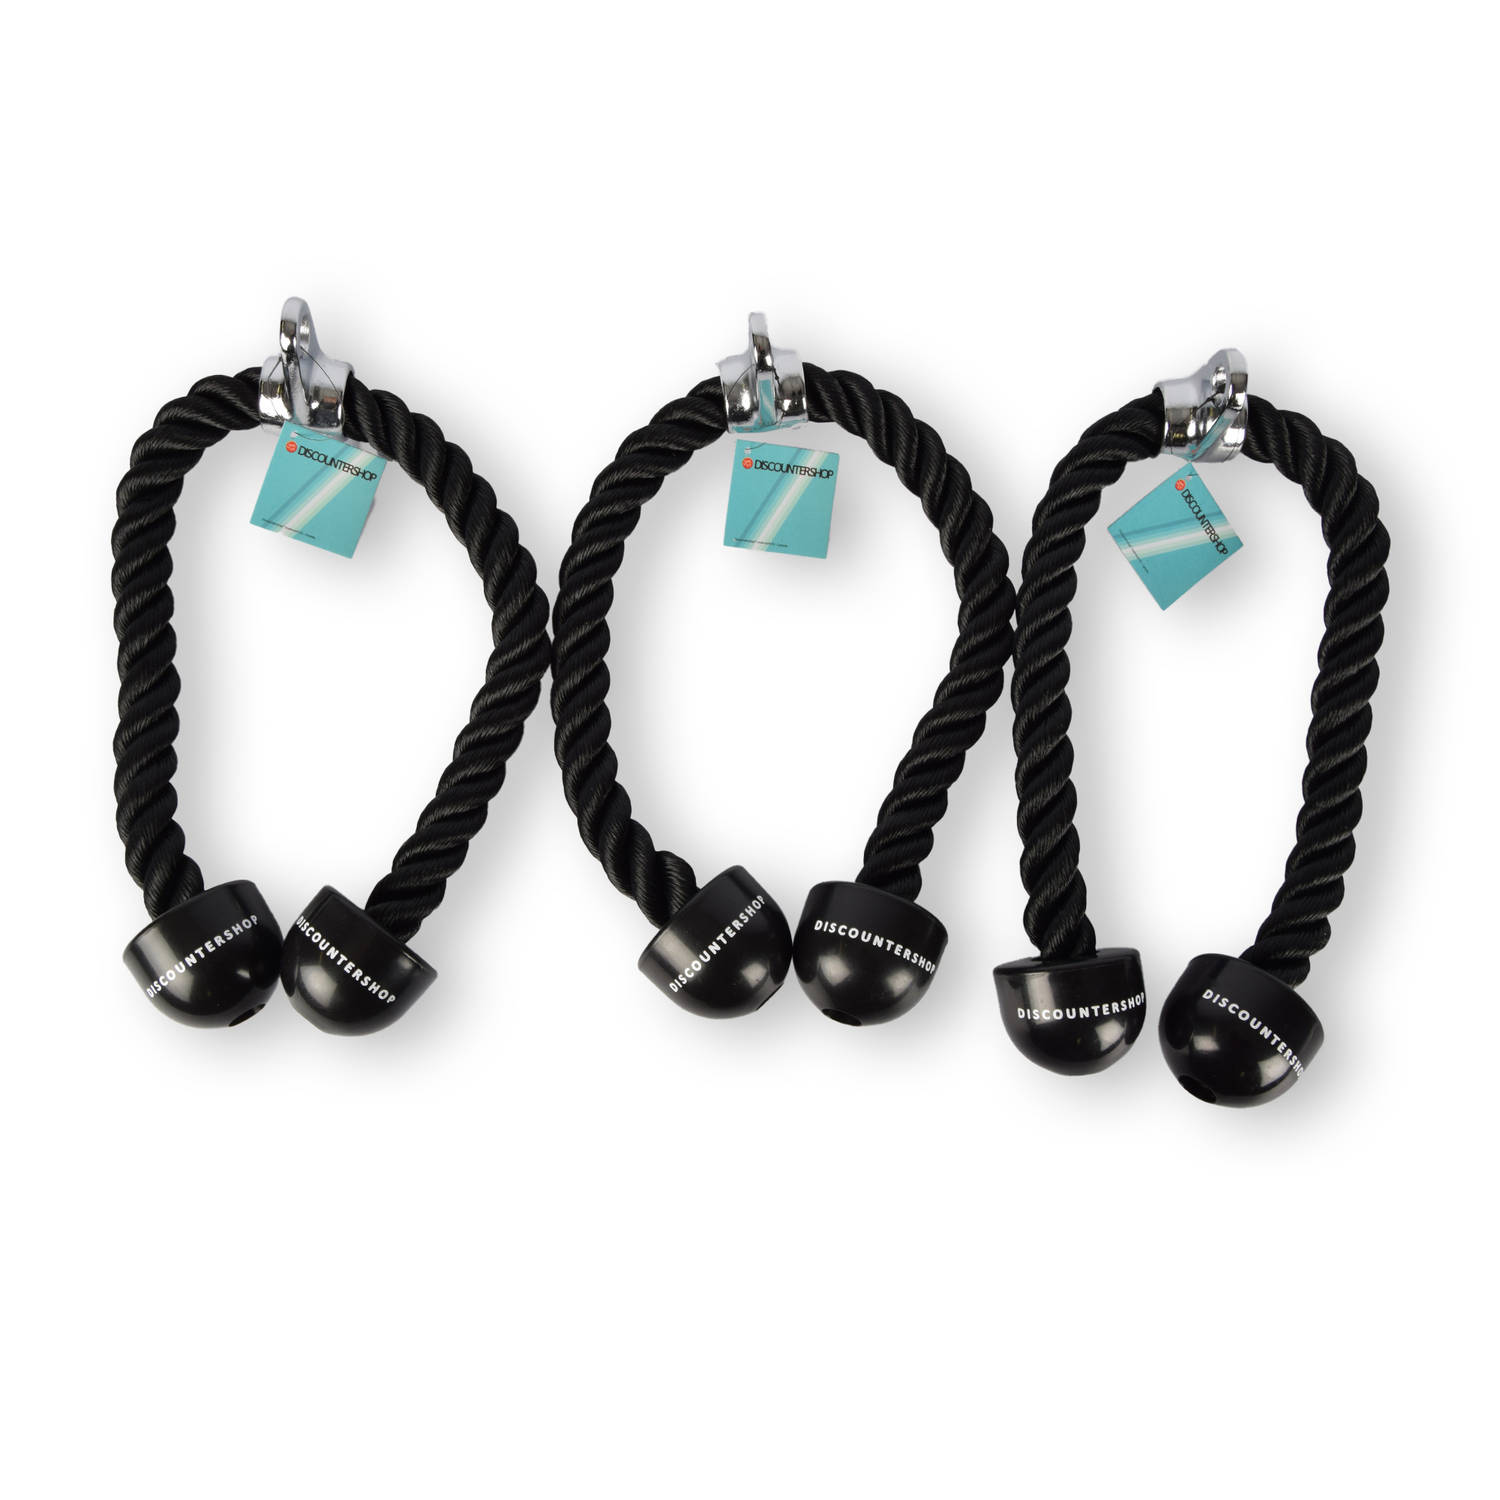 Set van 3 Tricep Ropes voor Krachttraining - 70cm - Zwart - Nylon + Rubber + Metaal - Home Gym Fitnessapparatuur - 200kg Belasting